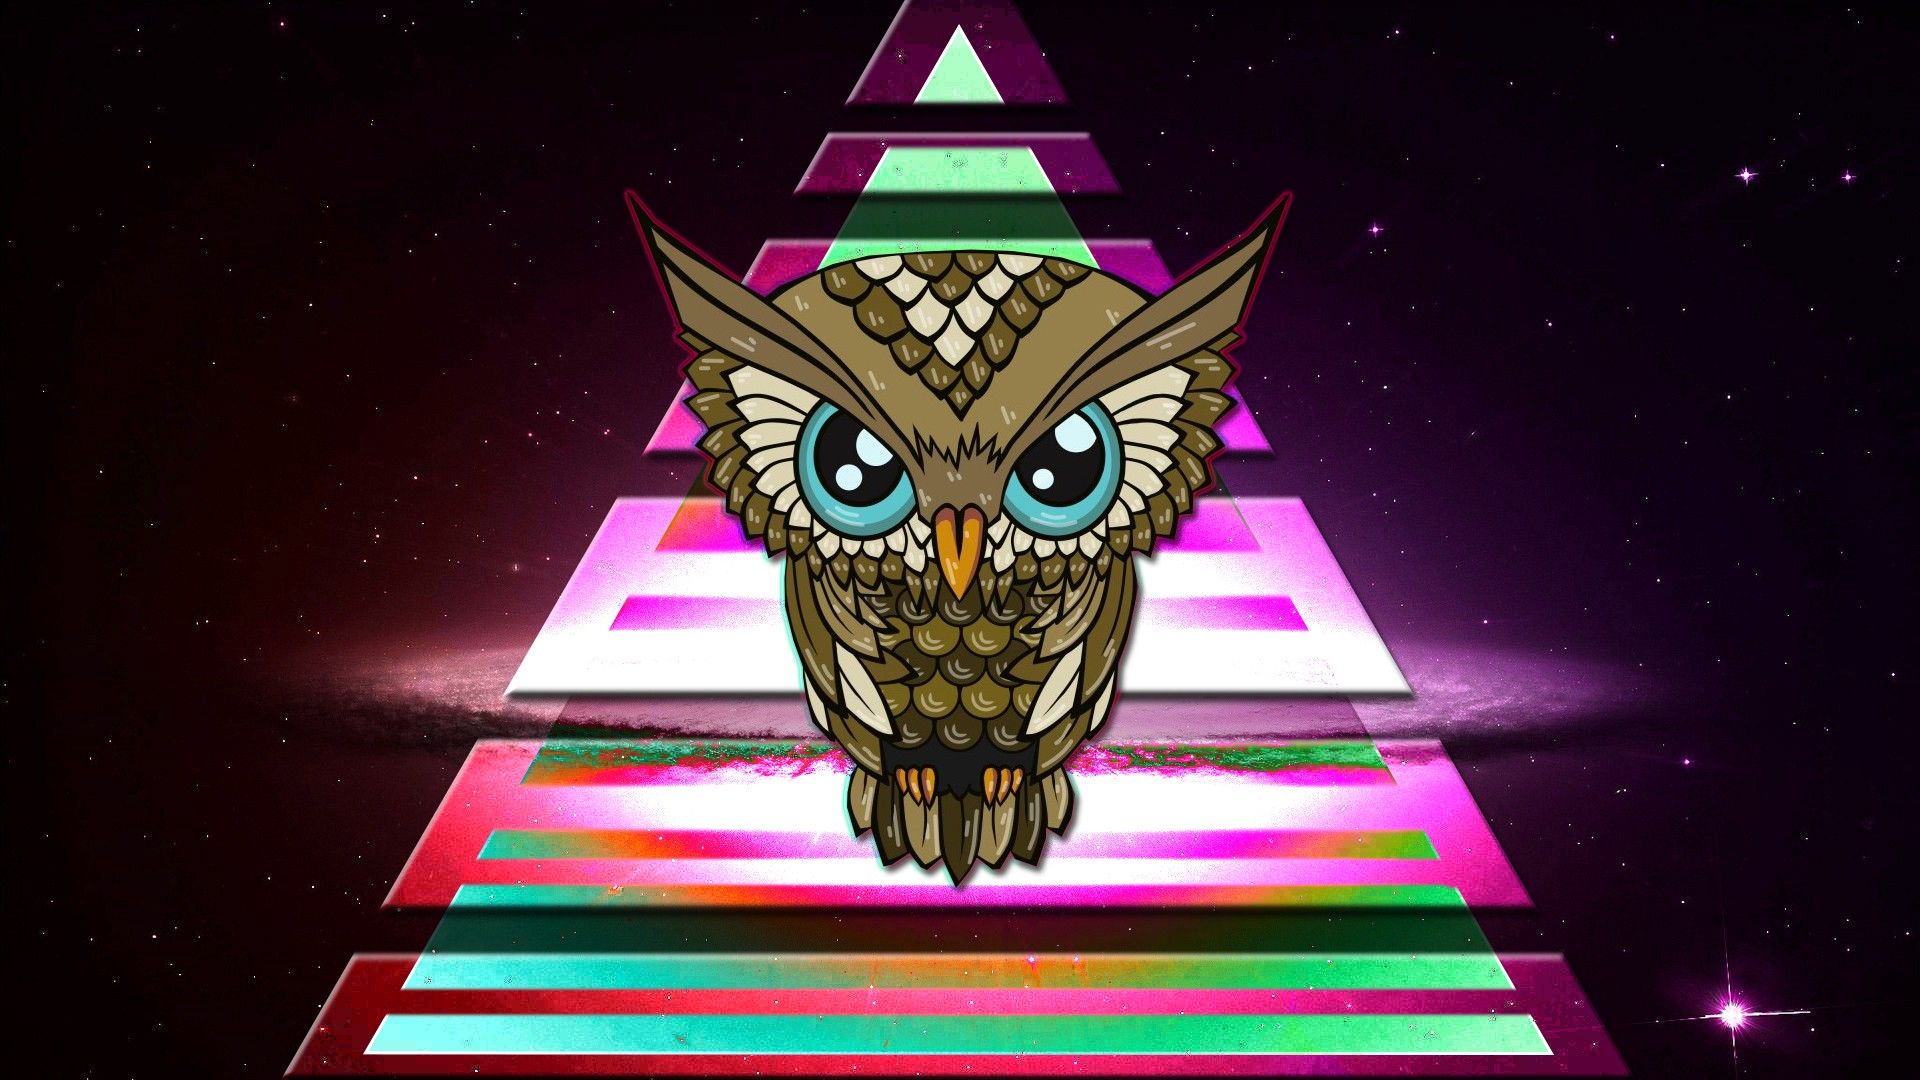 #Illuminati, #space, #owl, #colorful, #triangle, wallpaper. Mocah.org HD Wallpaper